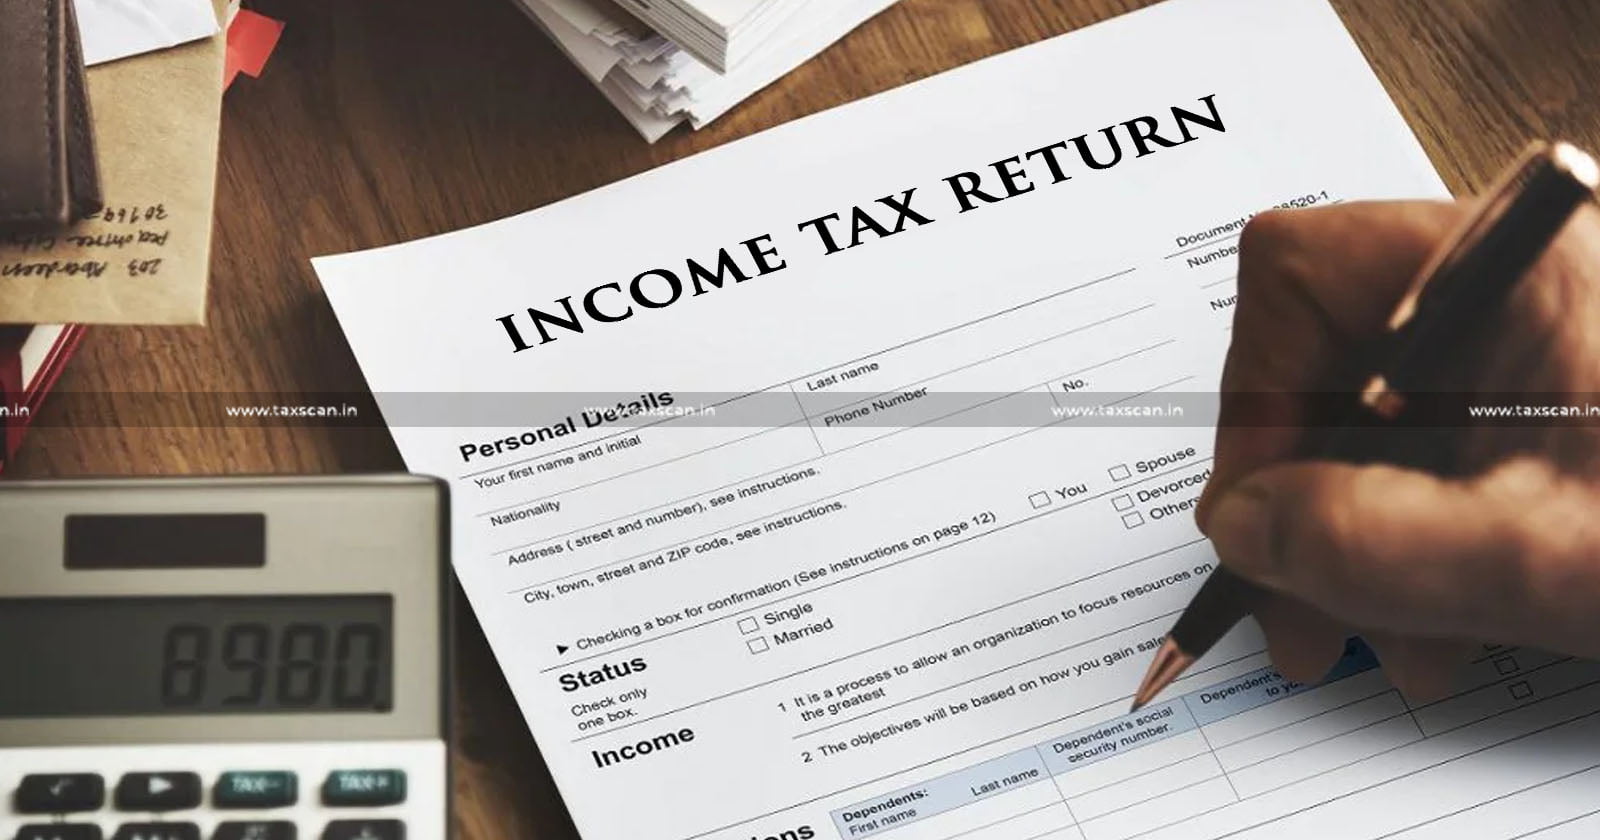 Due Date - Income Tax Return filing - Income Tax Return - Income Tax - Income Tax Return filing Due Date - Income Tax Return filing - Income Tax Return - Income Tax - - taxscanan